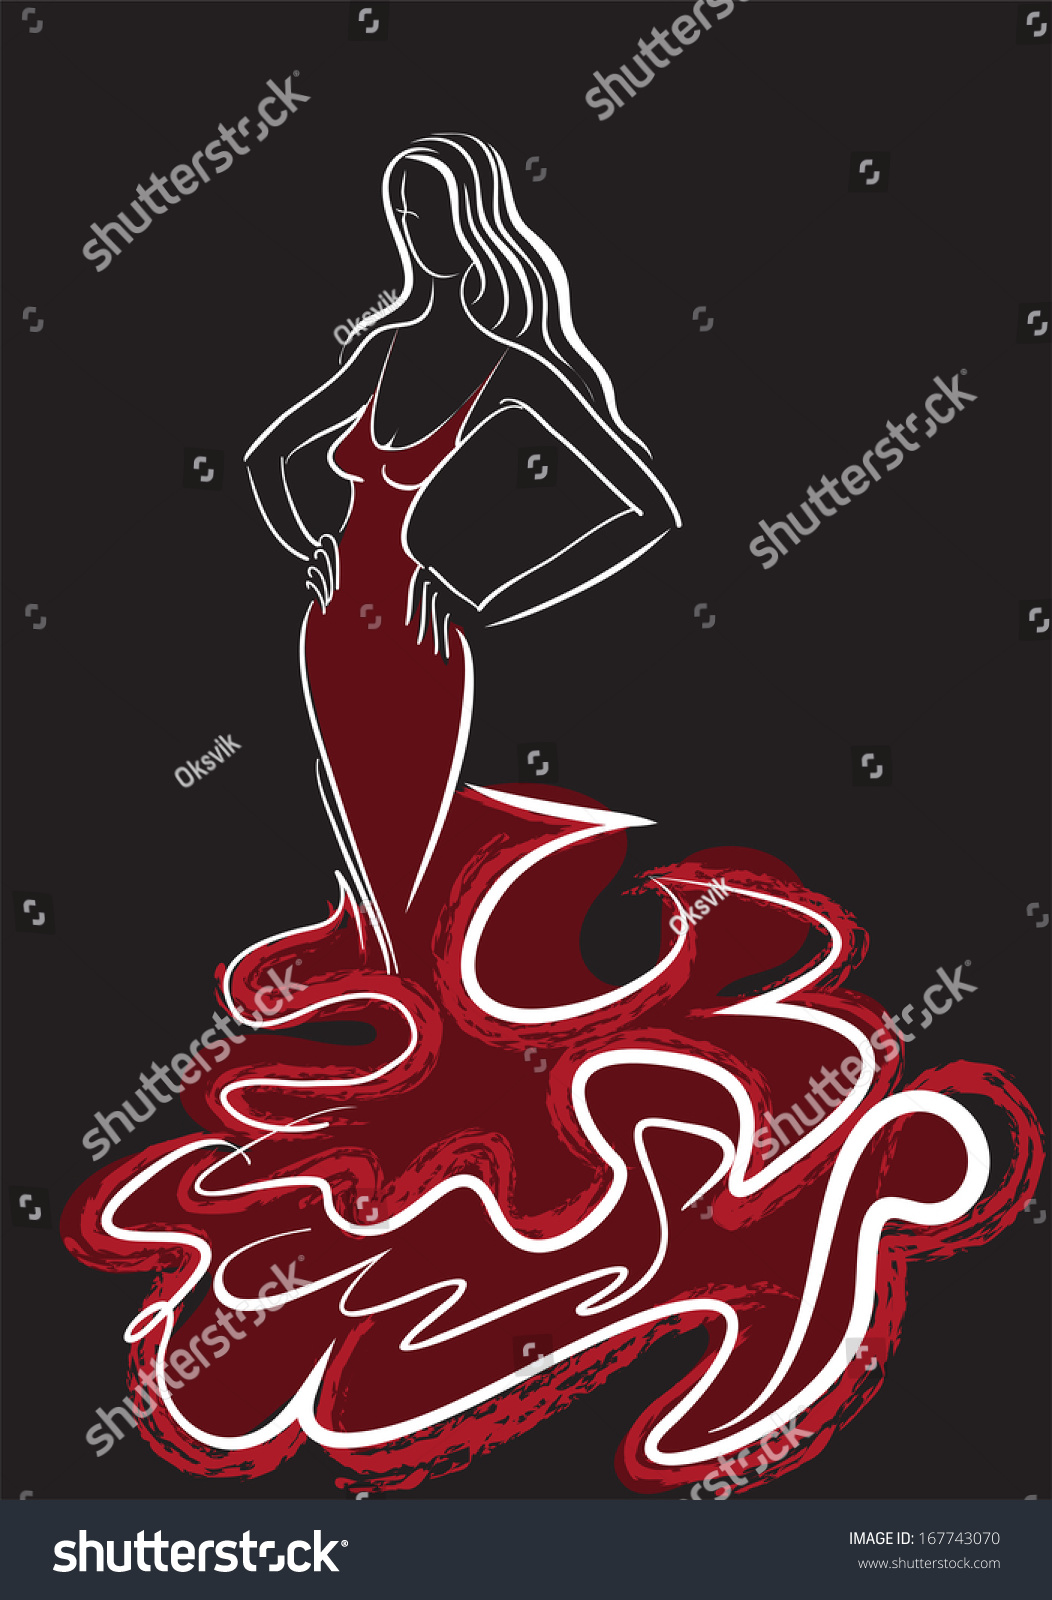 Silhouette Slender Woman Long Red Dress Stock Vector Royalty Free 167743070 Shutterstock 5018